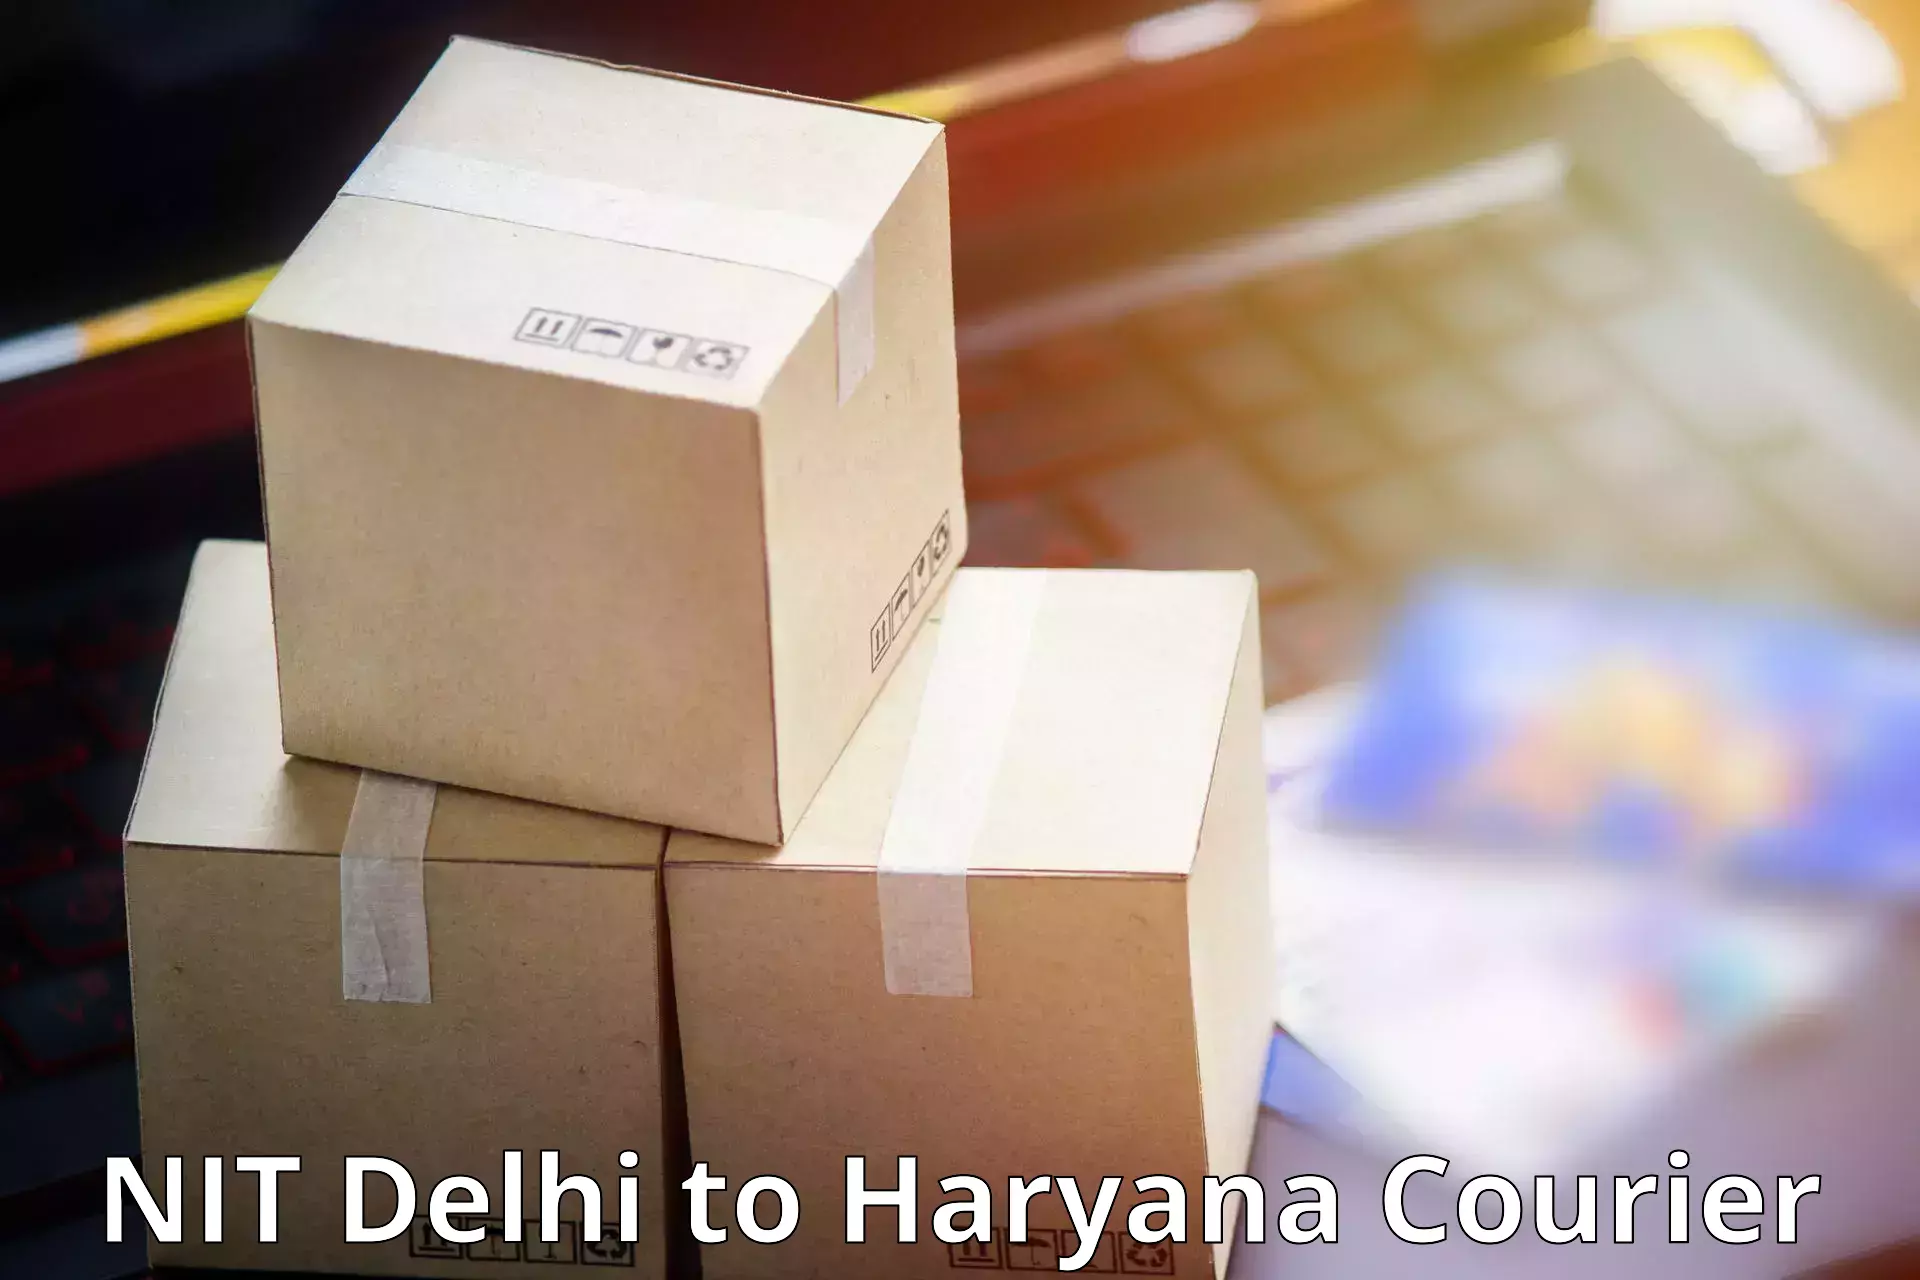 Advanced courier platforms NIT Delhi to Faridabad